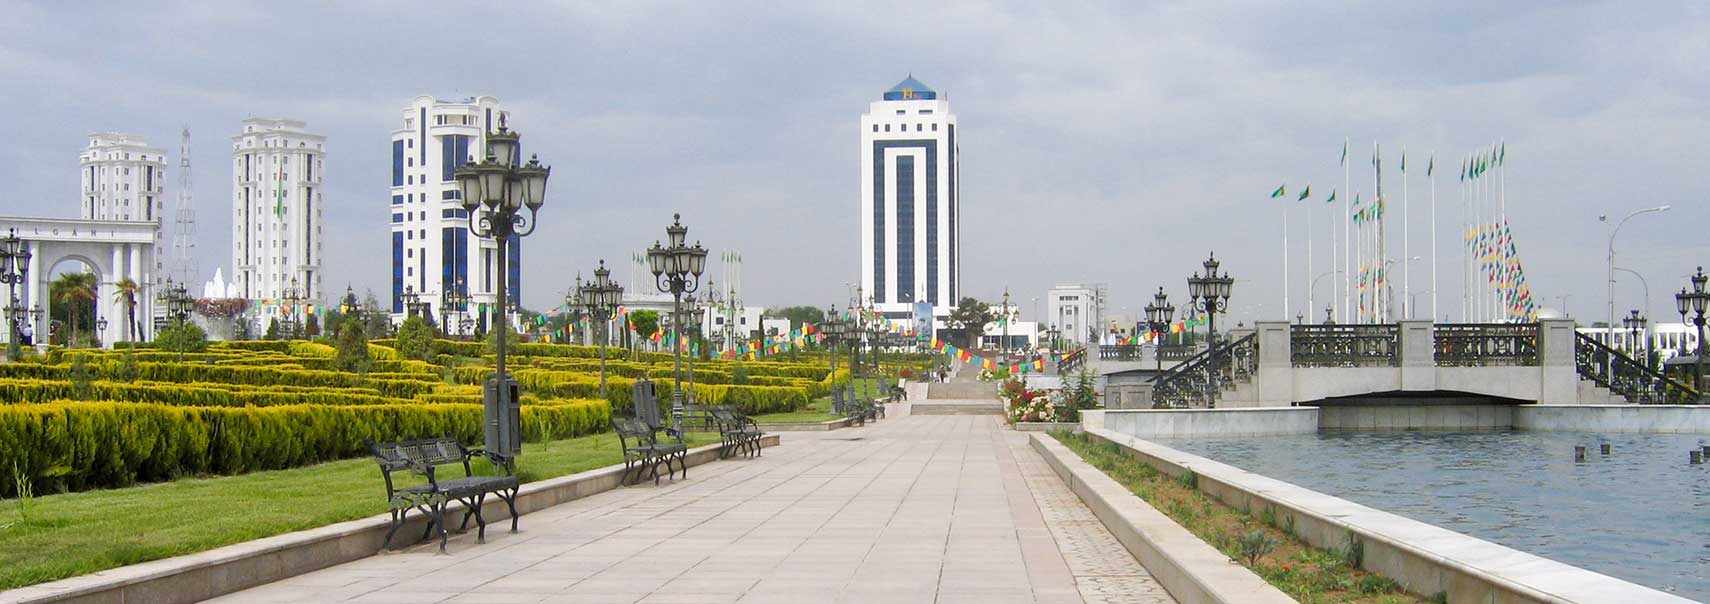 Ashgabat city park, Turkmenistan